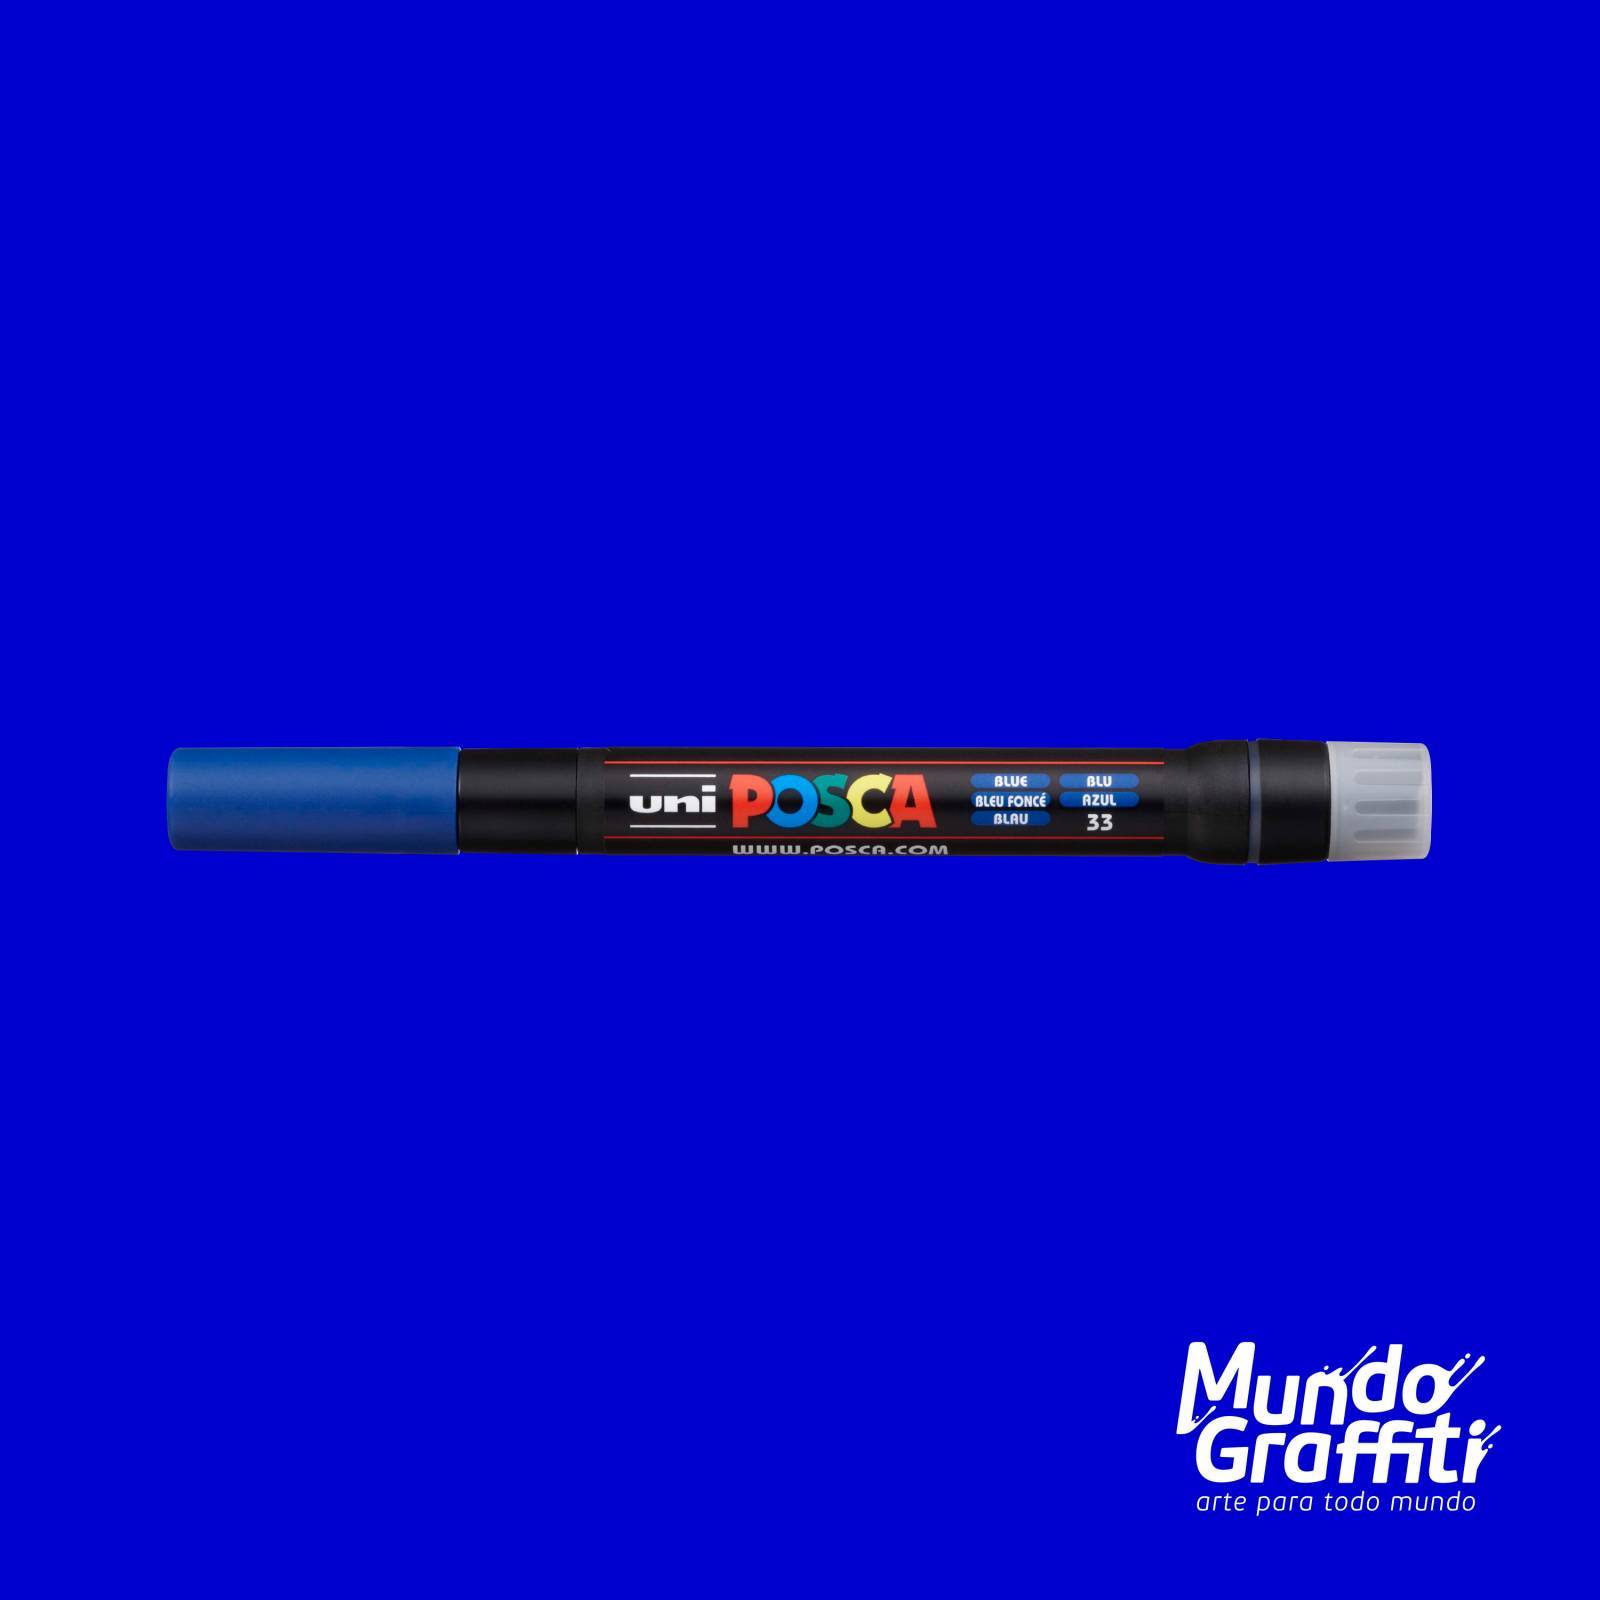 Caneta Brush Posca PCF 350 Azul - Mundo Graffiti